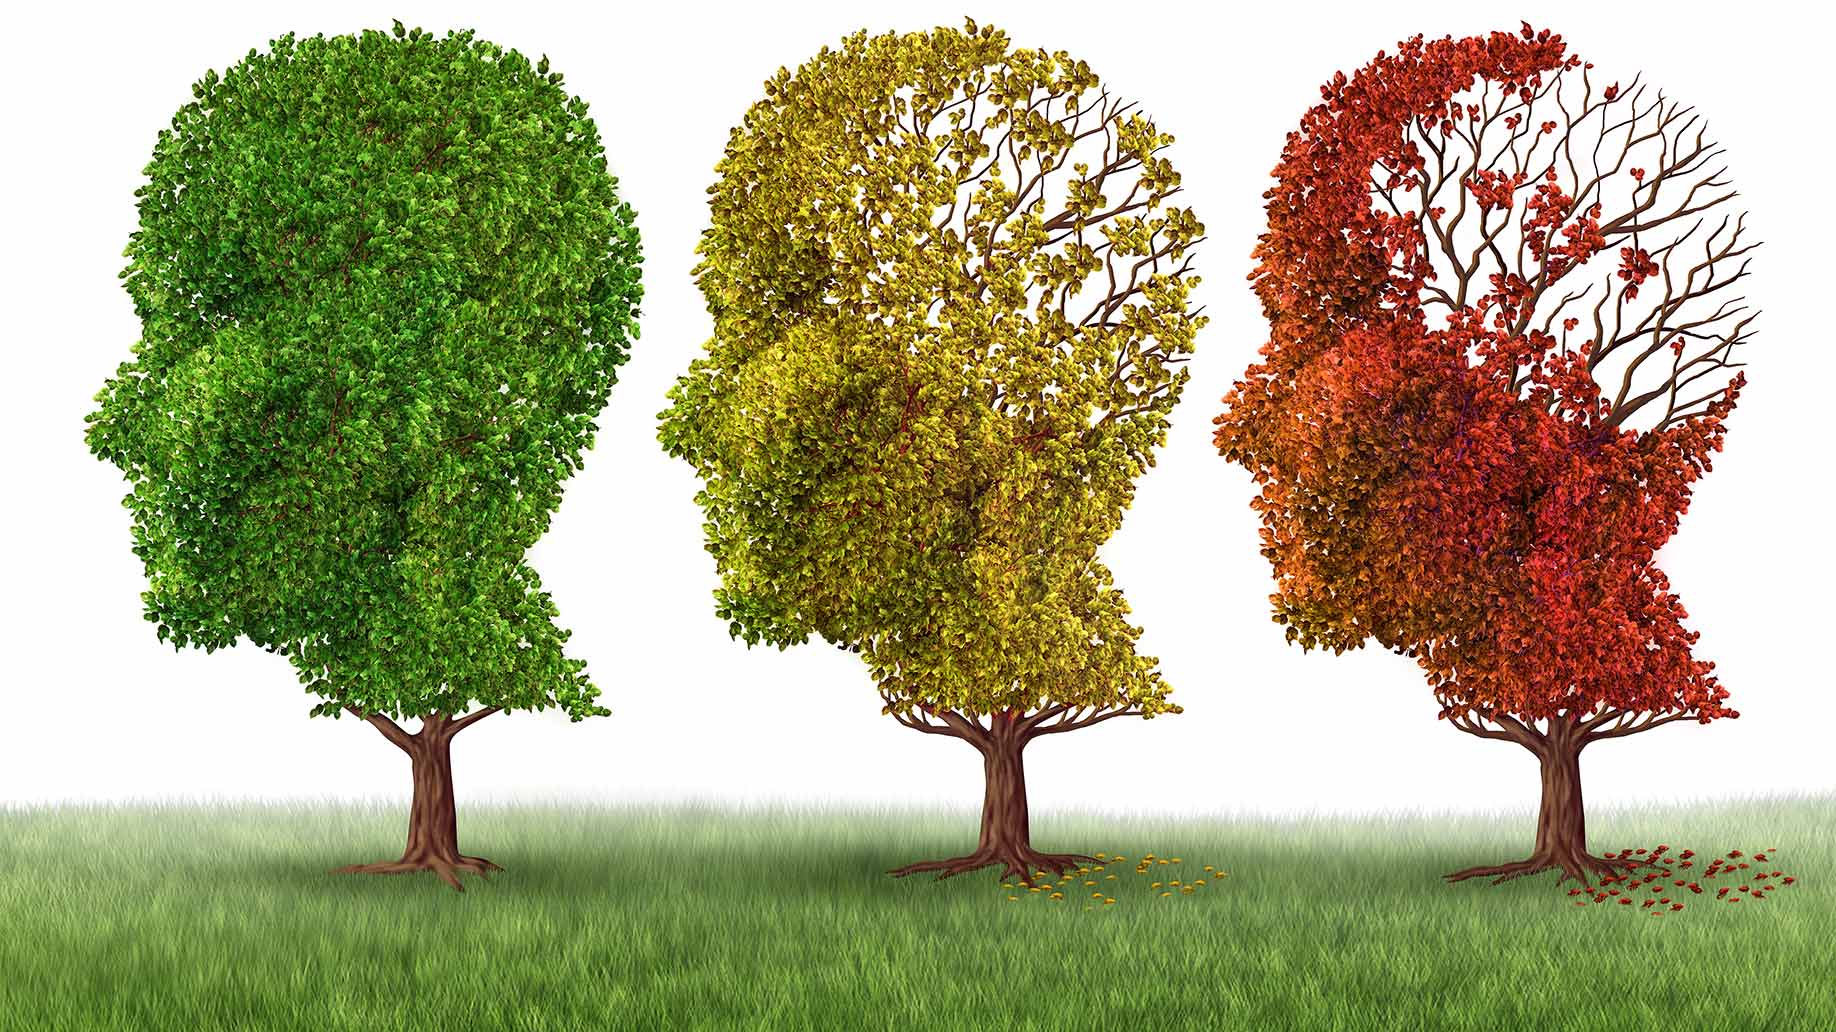 Alzheimers disease dementia memory loss brain cells vitamin d cognition